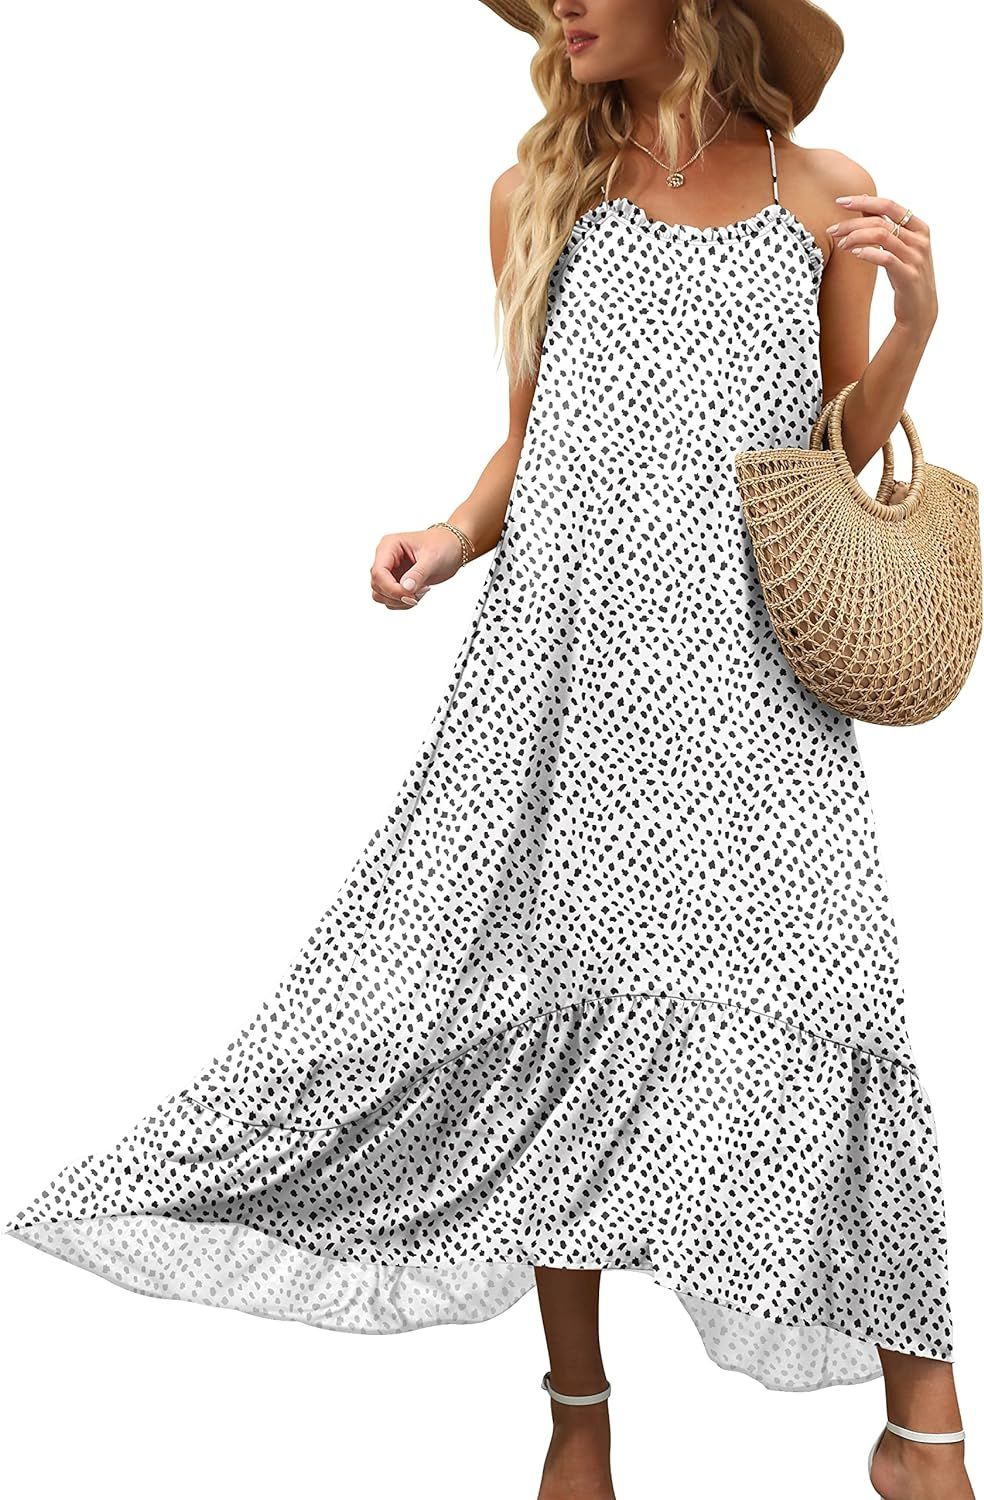 LOGENE Women's Summer Casual Loose Maxi Dresses Floral Print Long Boho Beach Sundress | Amazon (US)